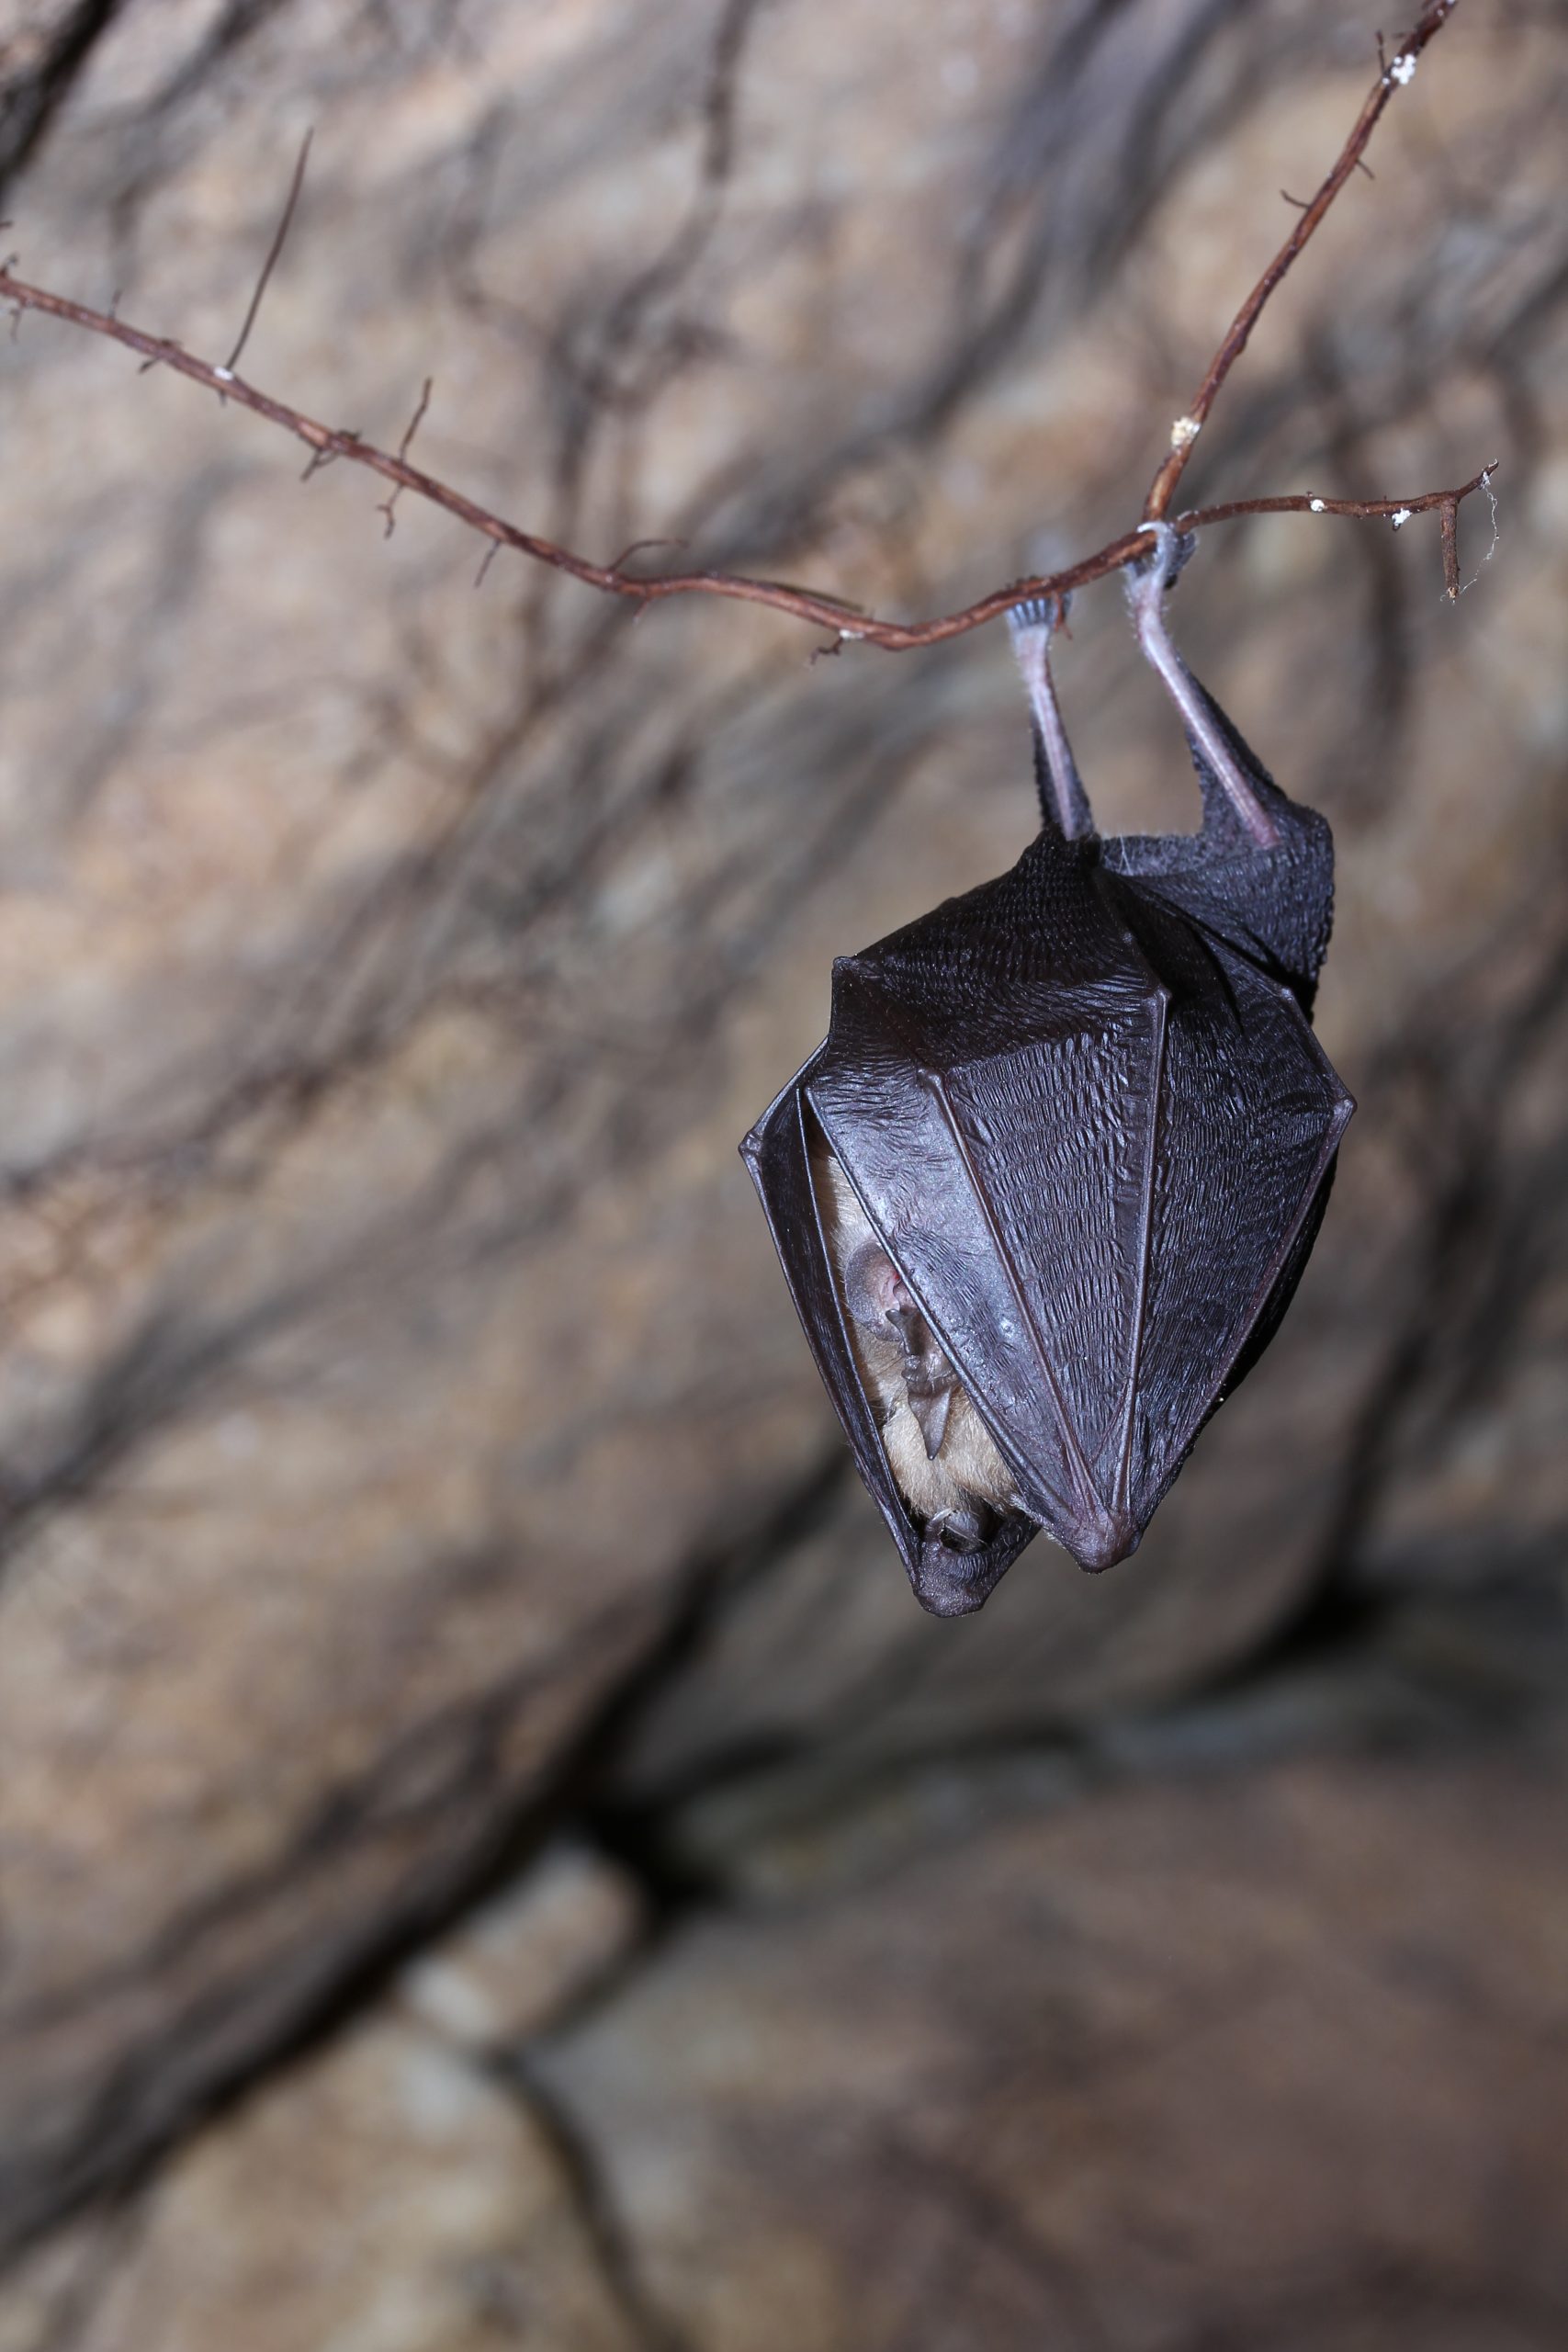 Greece creates 5,000 artificial bat shelters